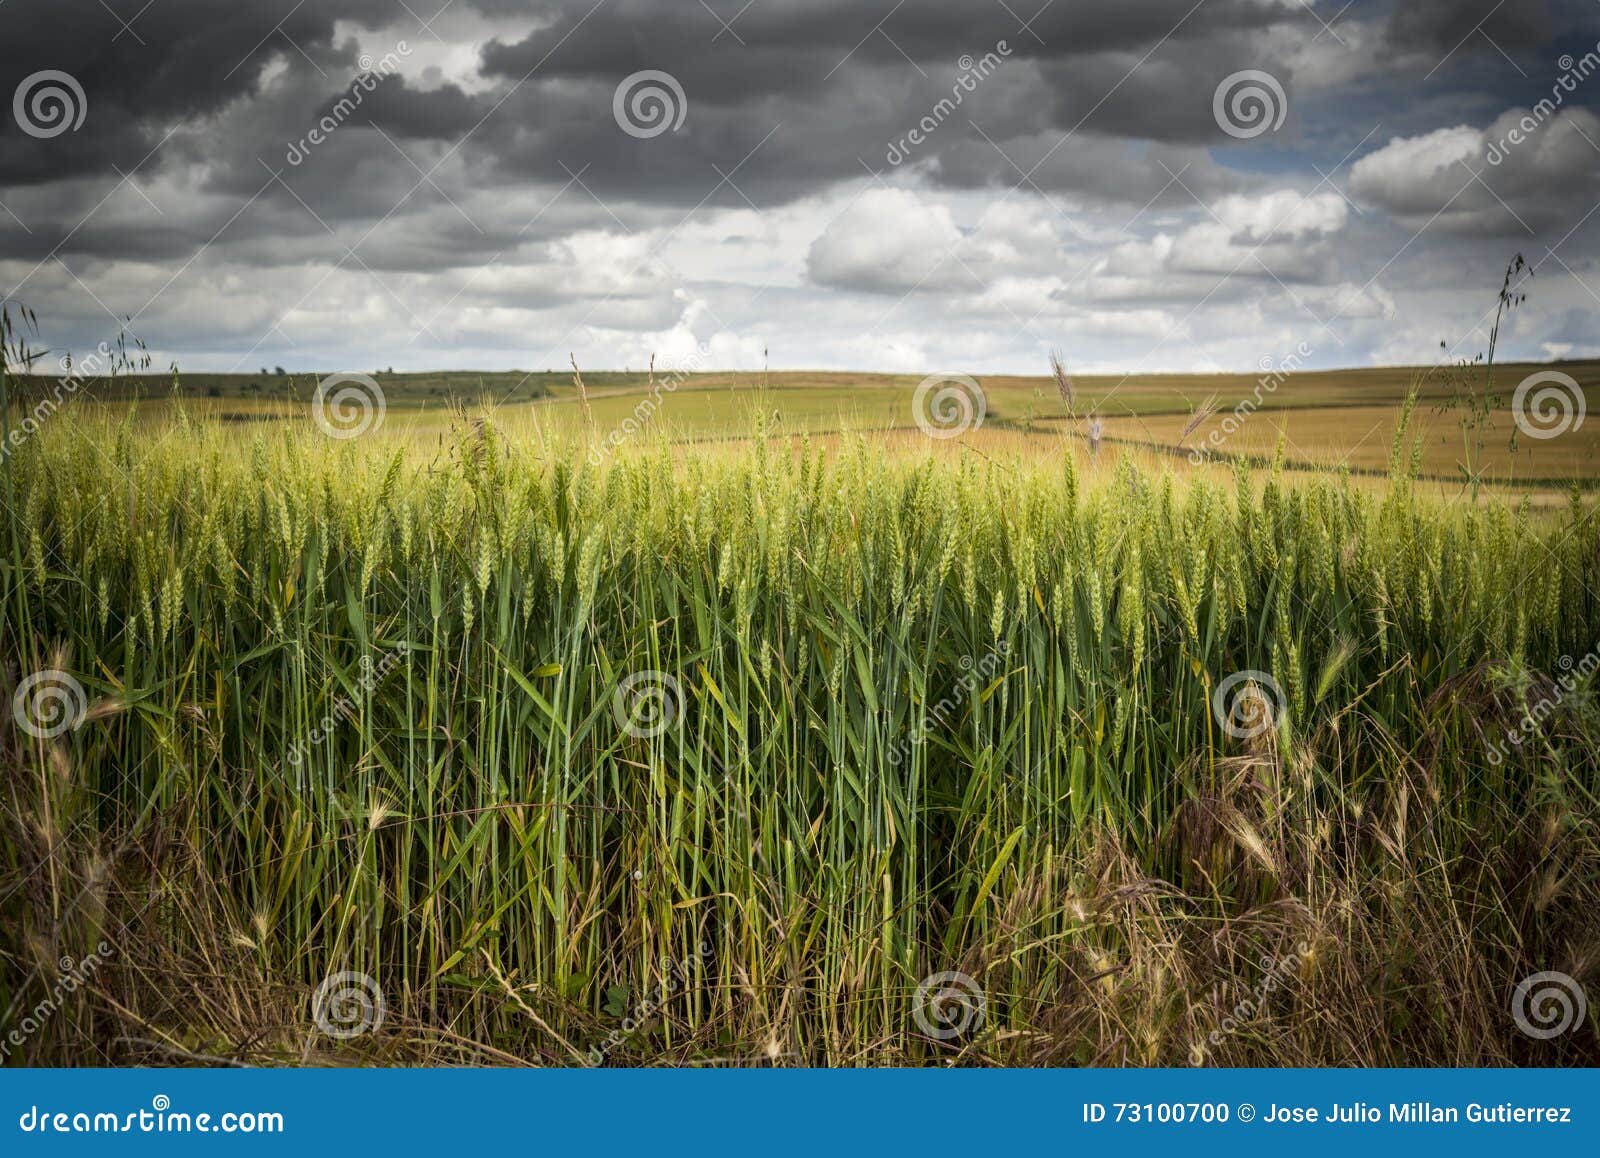 fields of castile